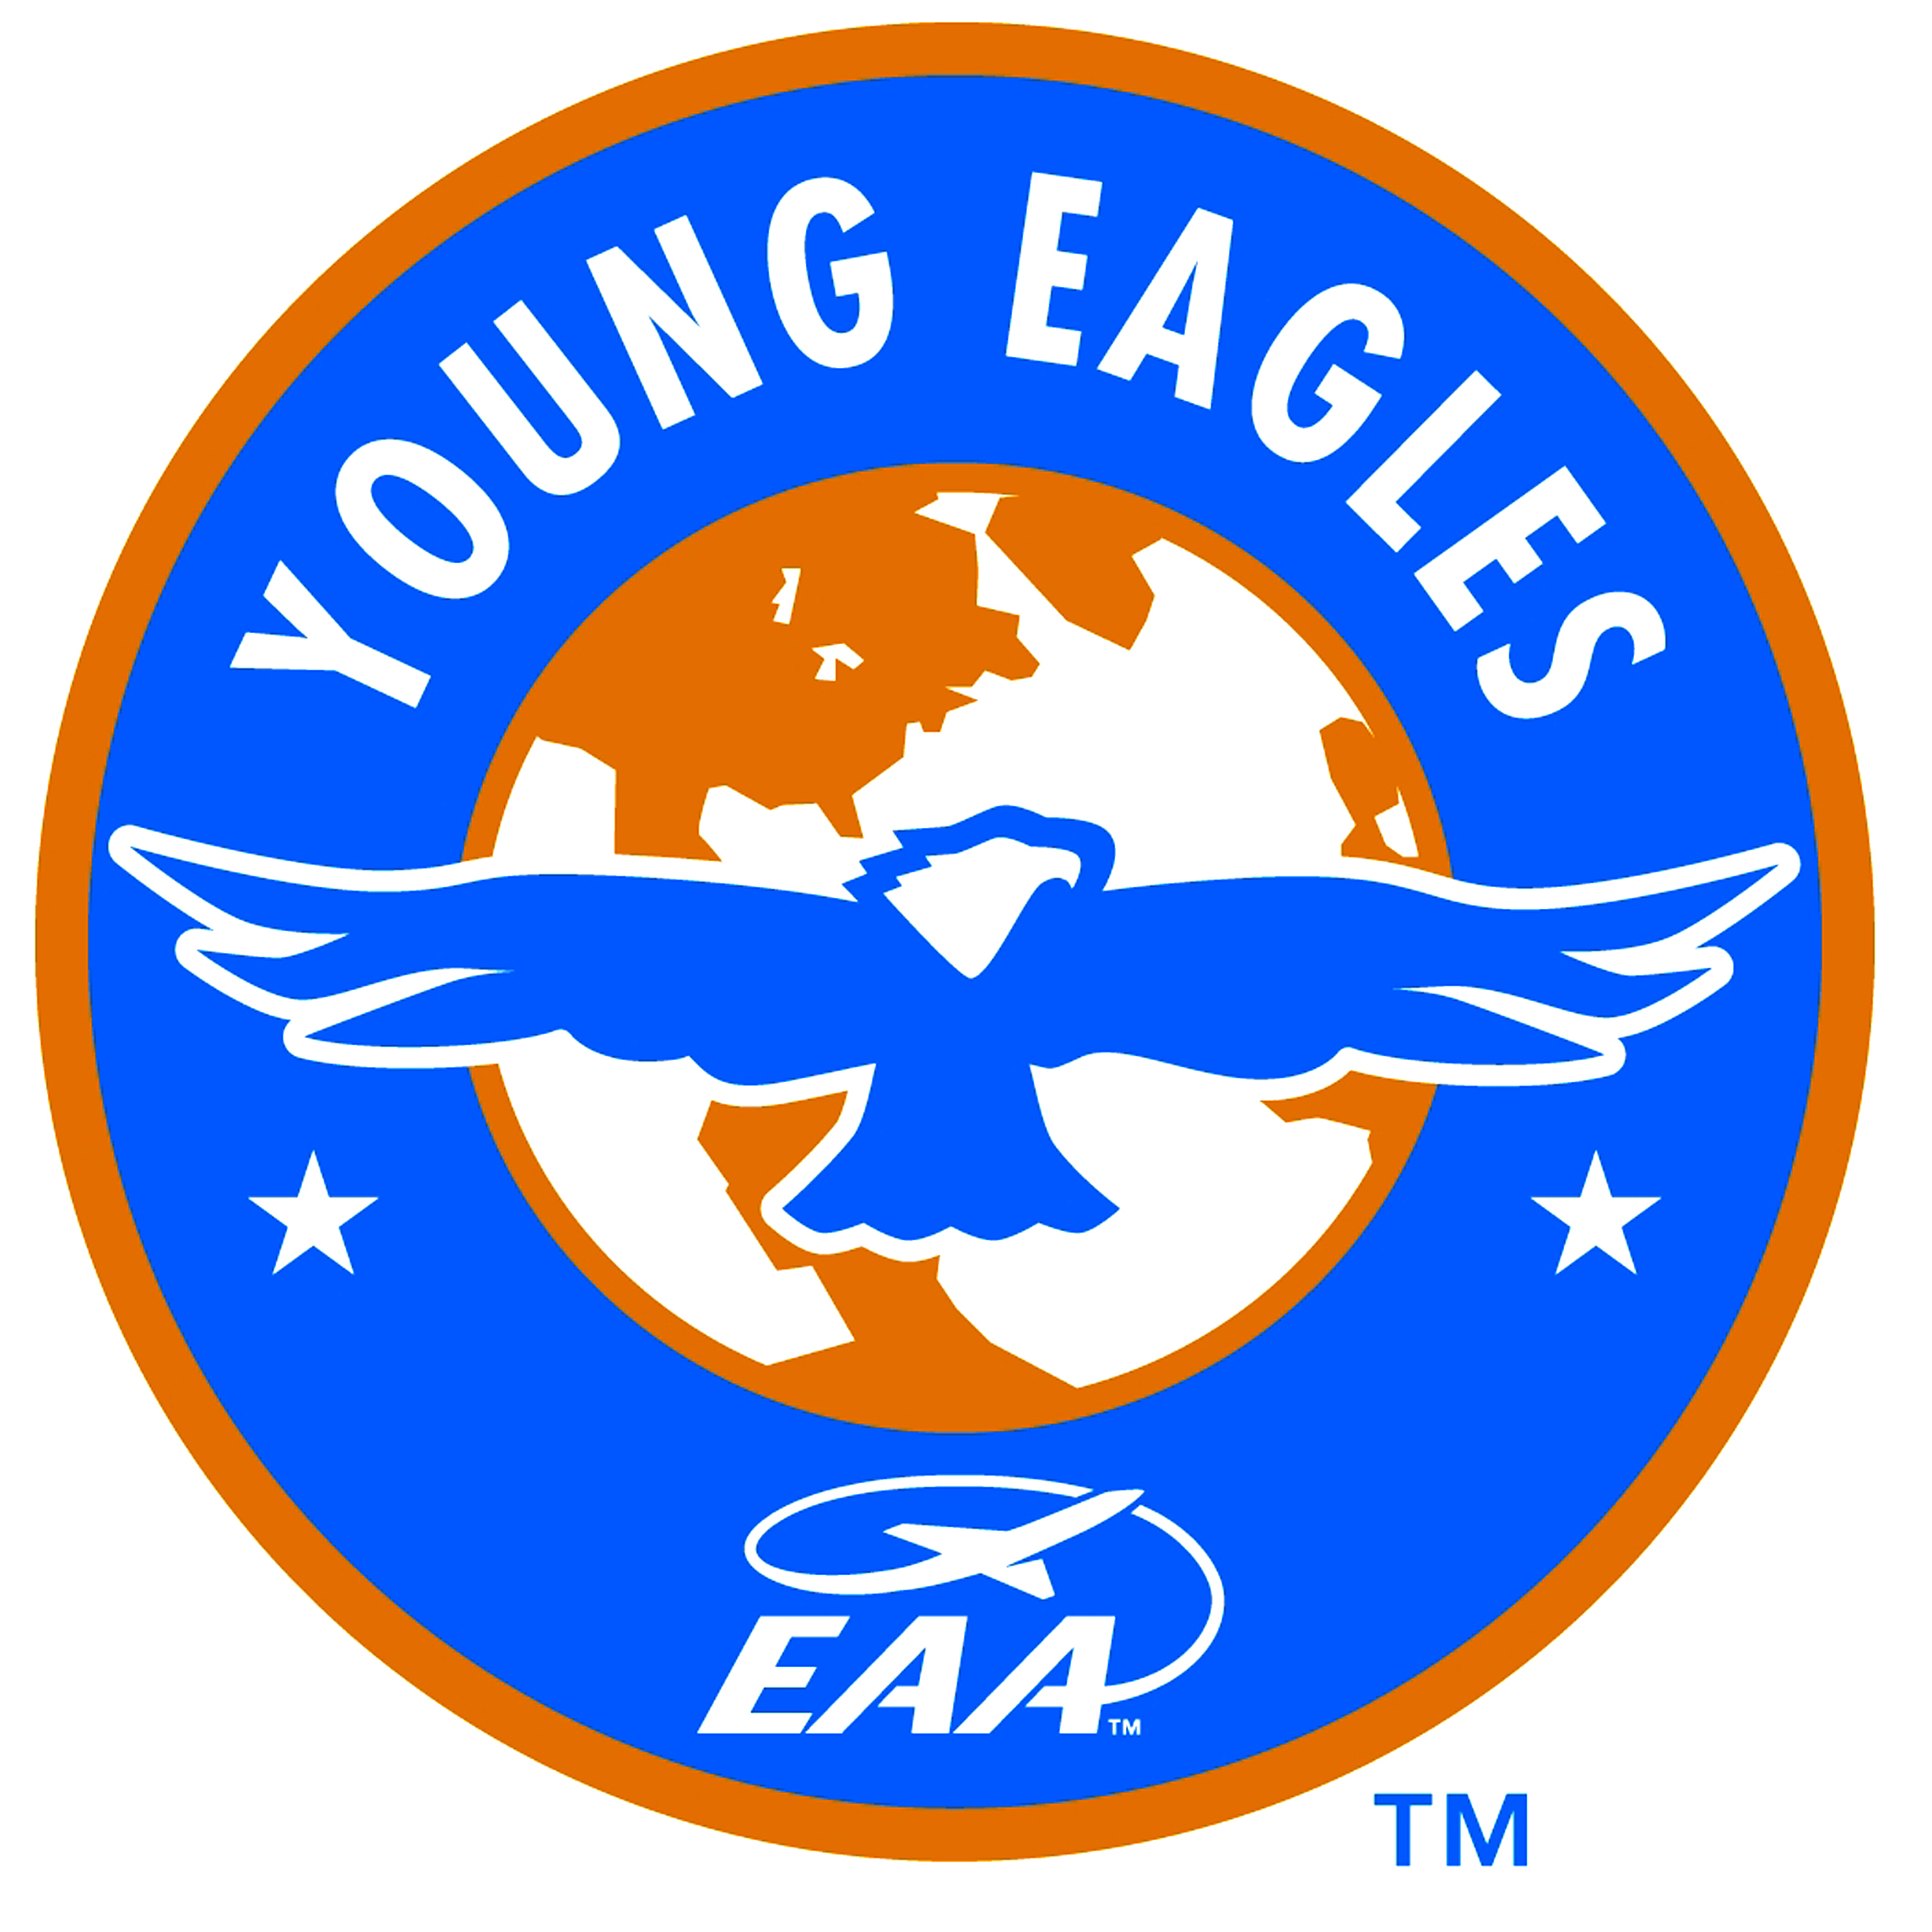 EAA Young Eagles program logo (logo trademarked by Experimental Aircraft Association).